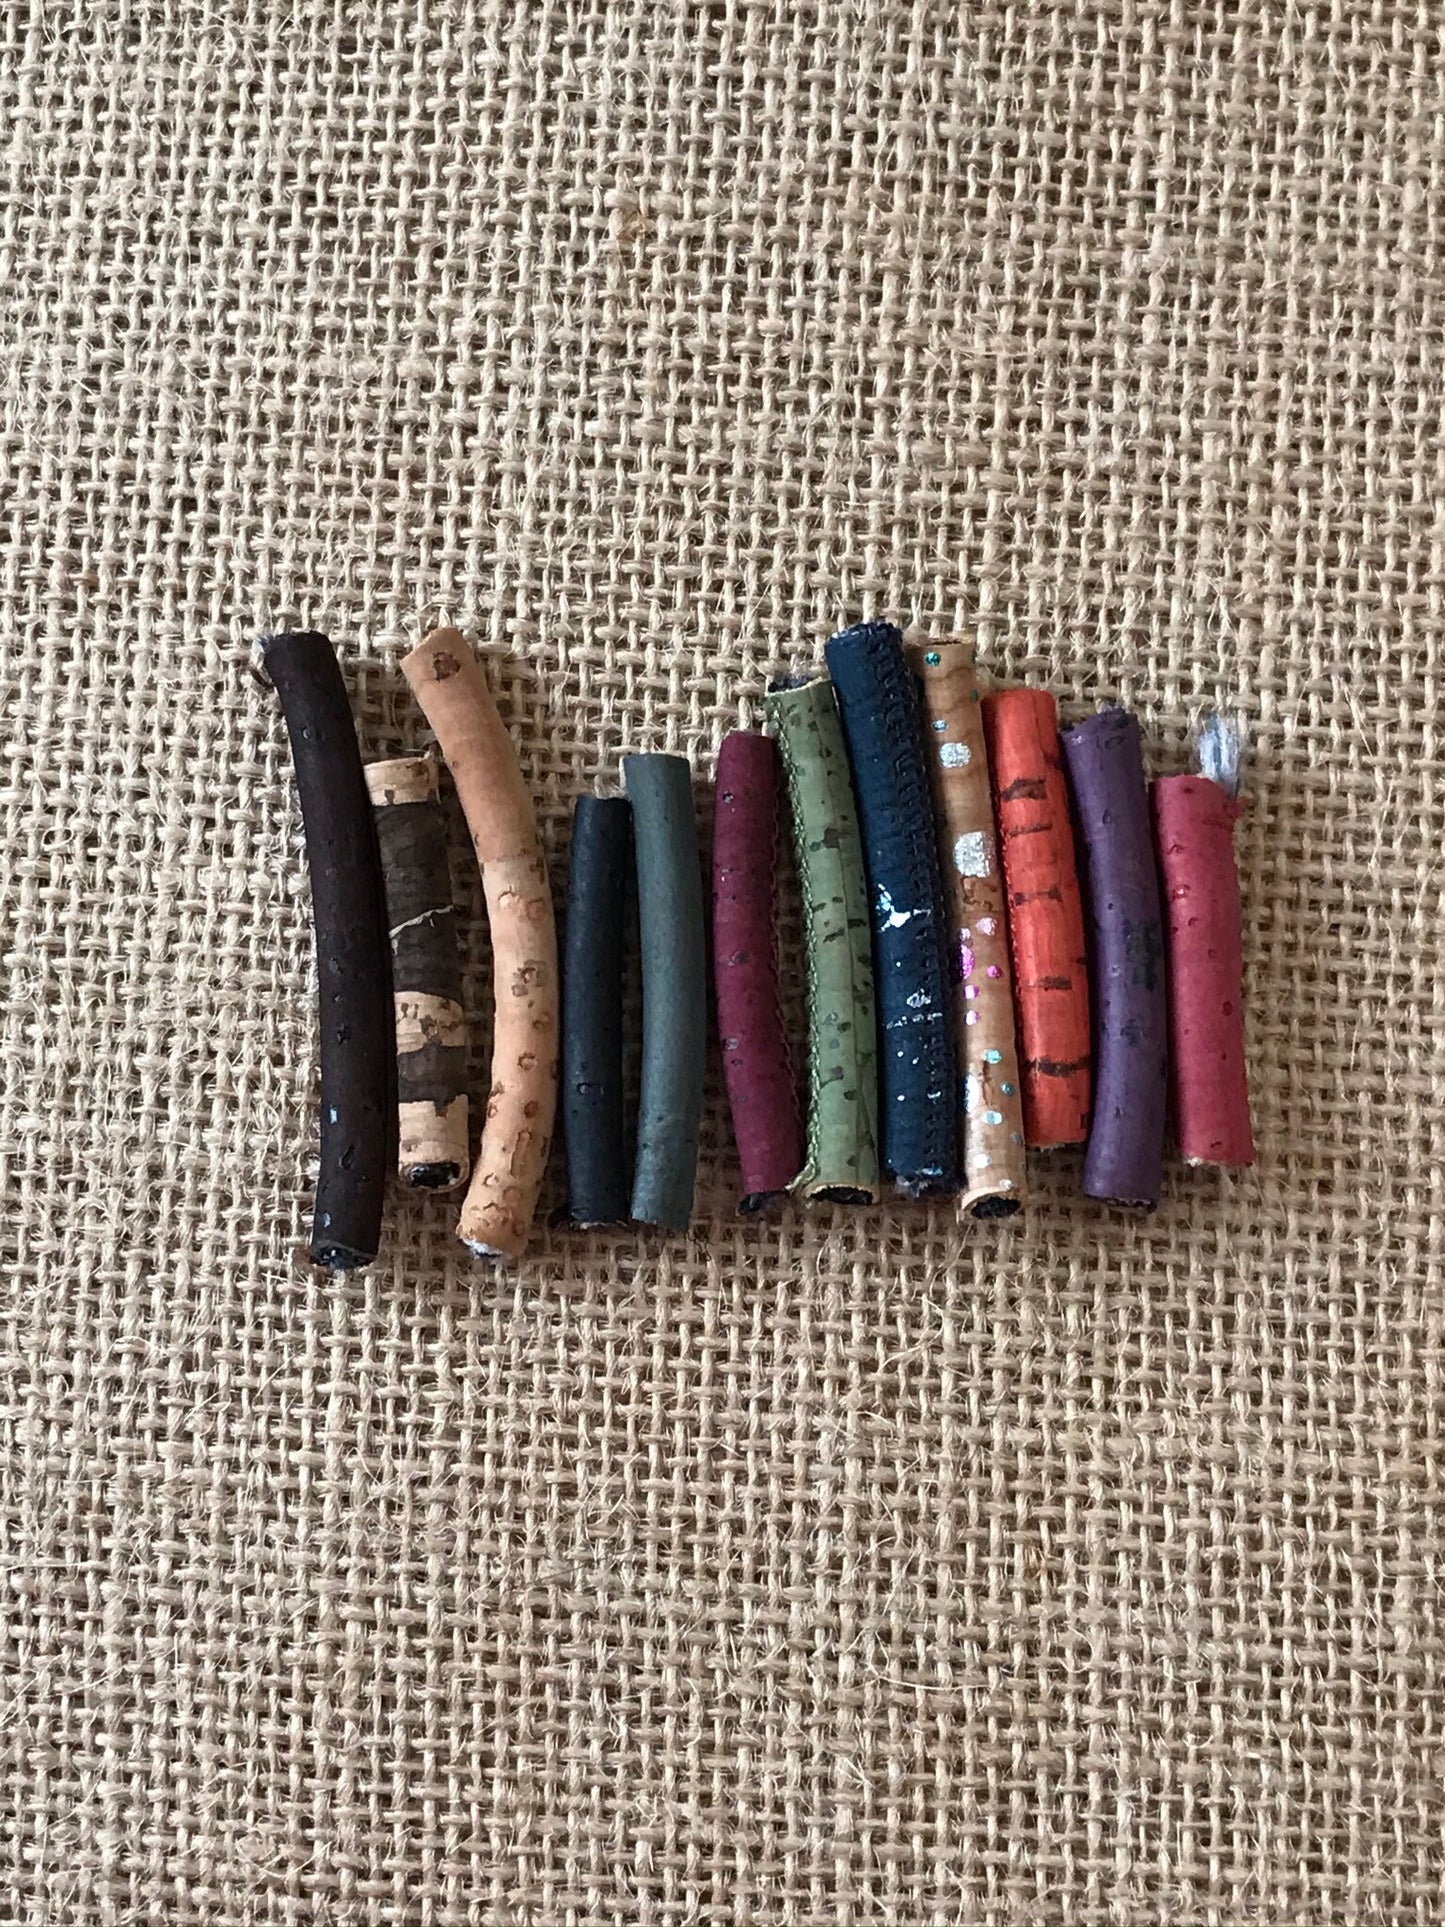 Handmade Cork necklace with Circle Pendant Vegan